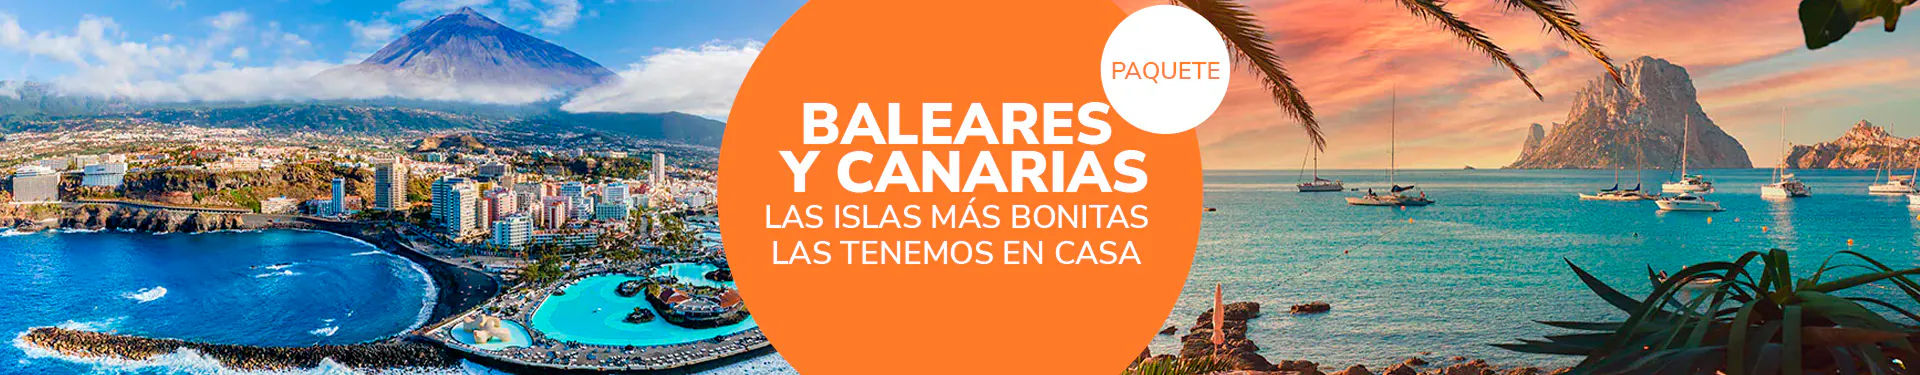 Baleares Canarias